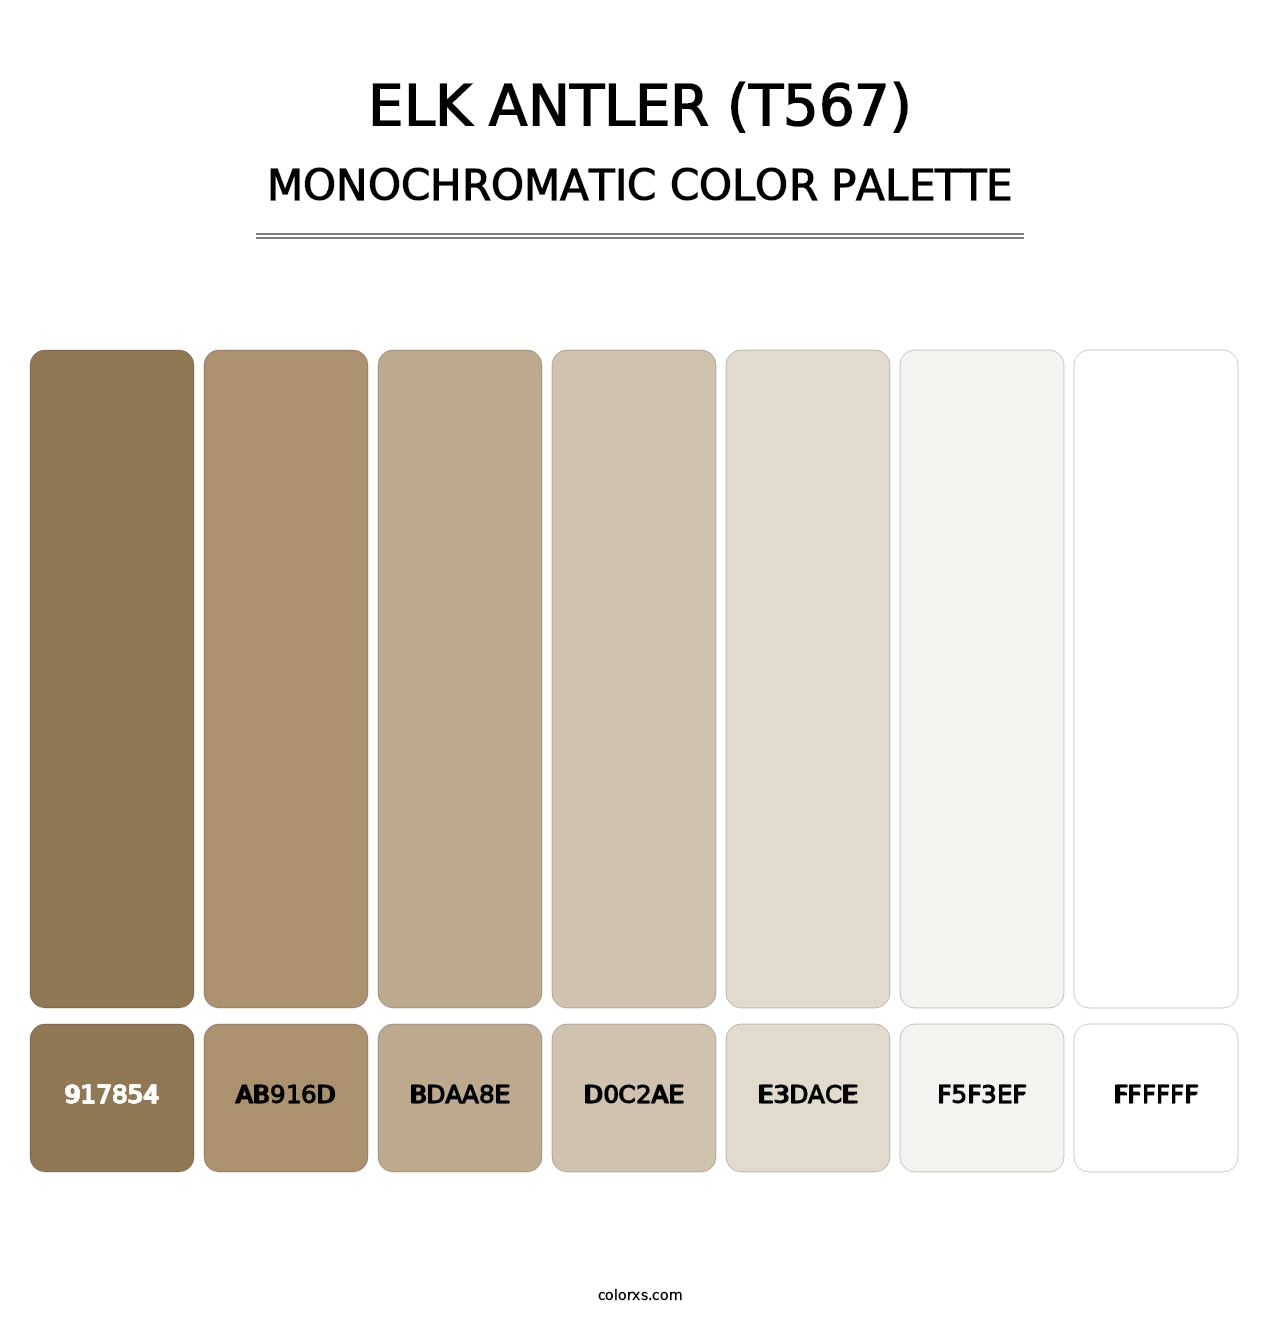 Elk Antler (T567) - Monochromatic Color Palette